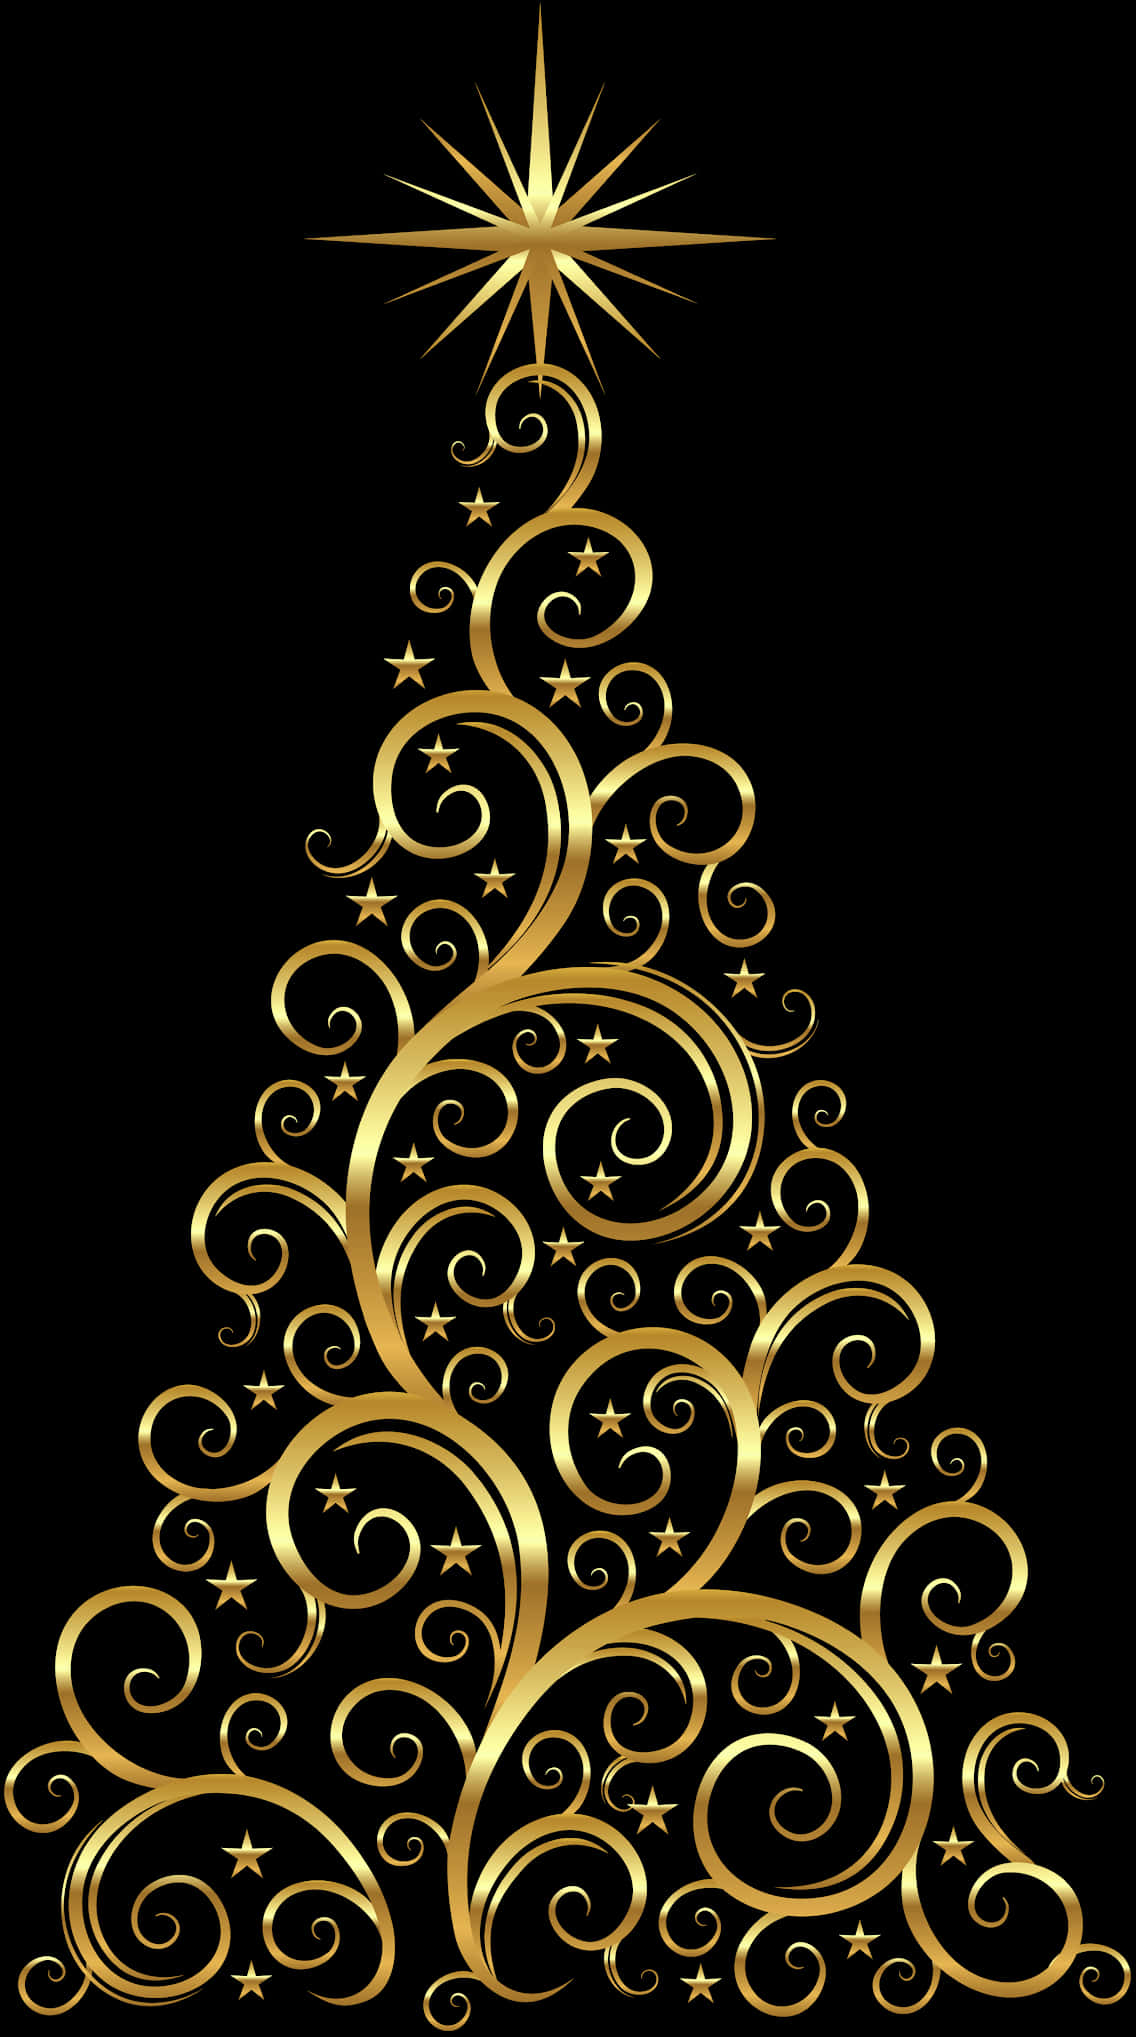 A Gold Swirly Christmas Tree